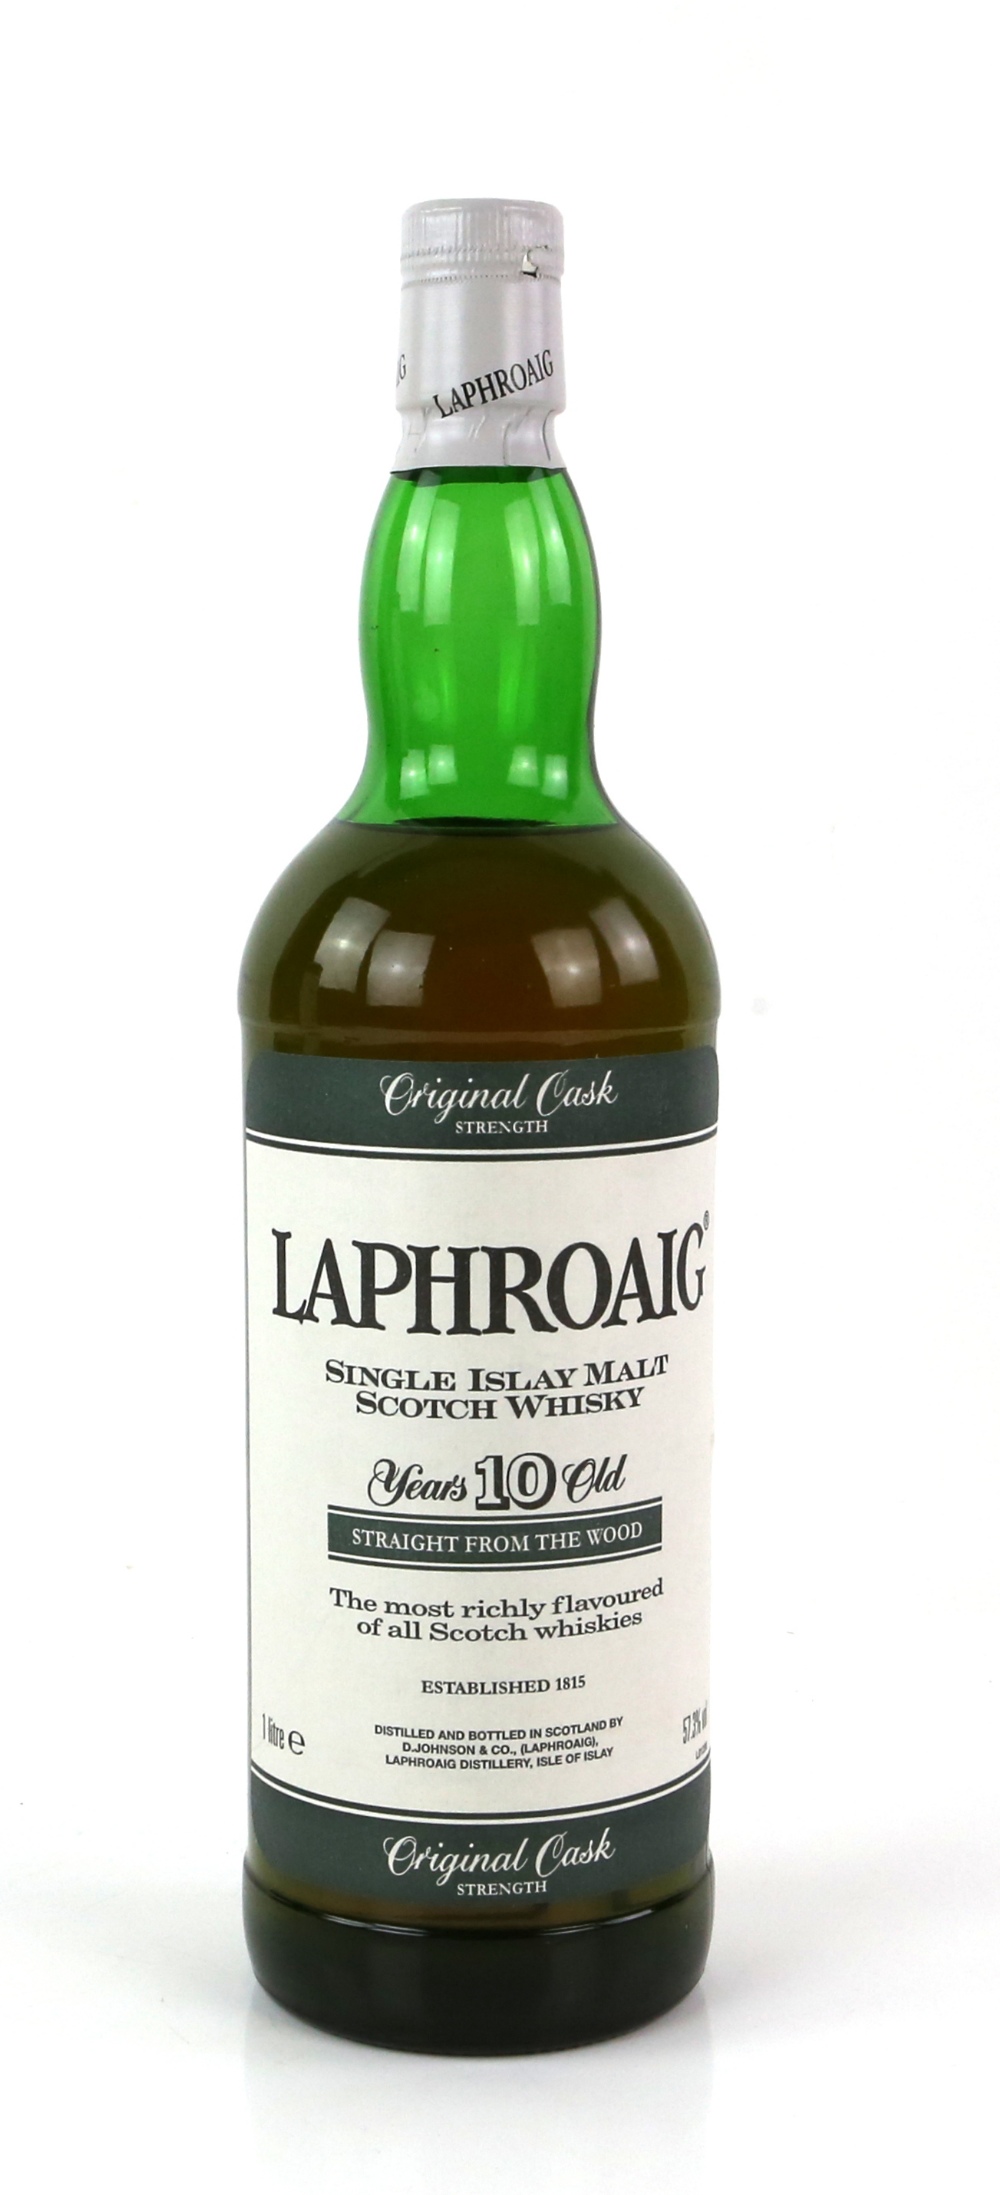 One bottle of Laphroaig Single Islay Malt Scotch Whiskey, aged 10 years, 1 litre, in presentation - Image 2 of 3